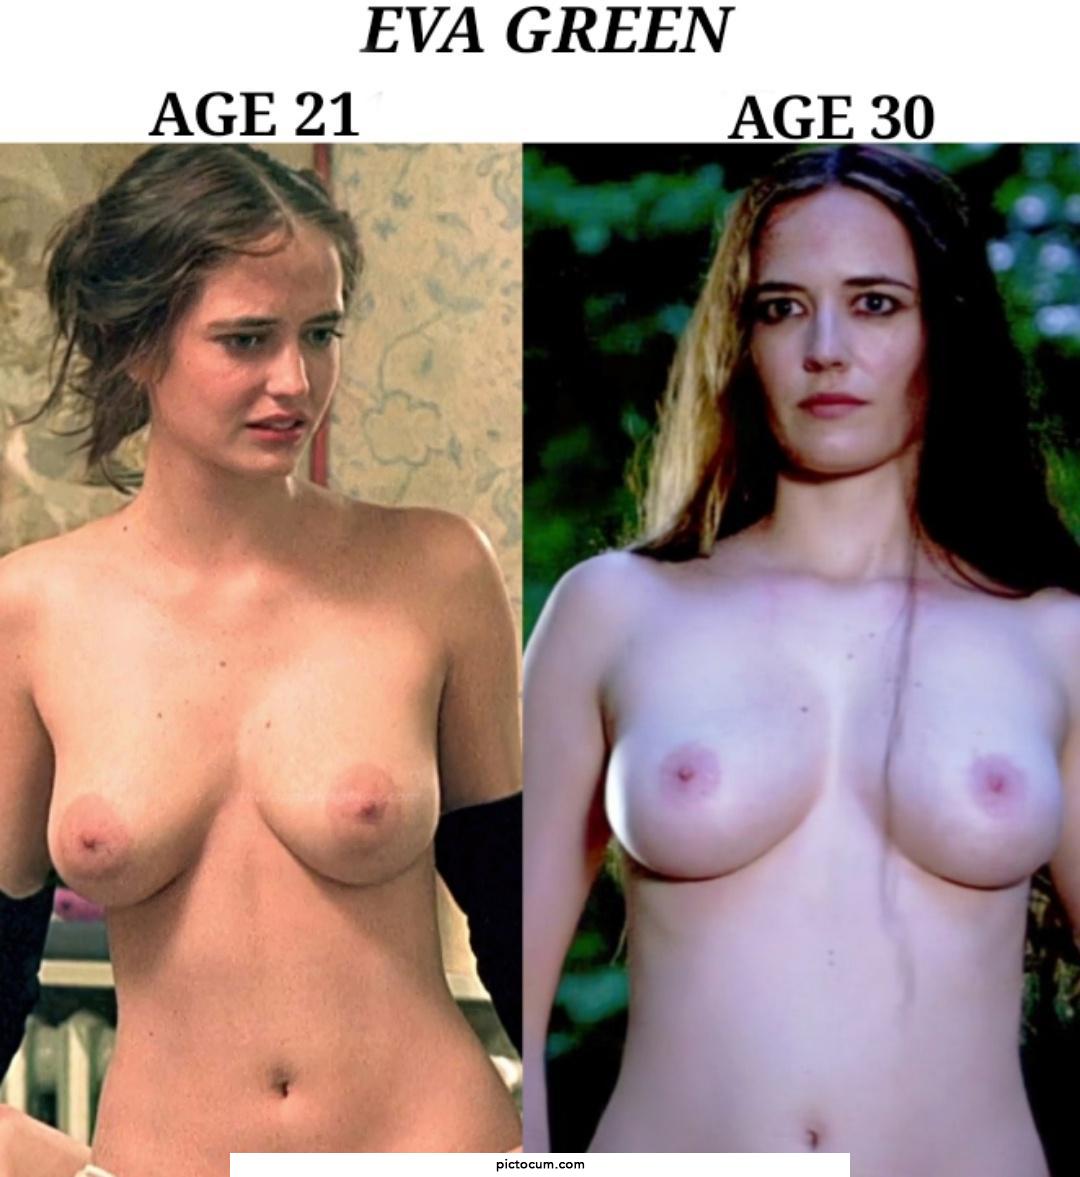 Eva Green's Breasts 9 years apart